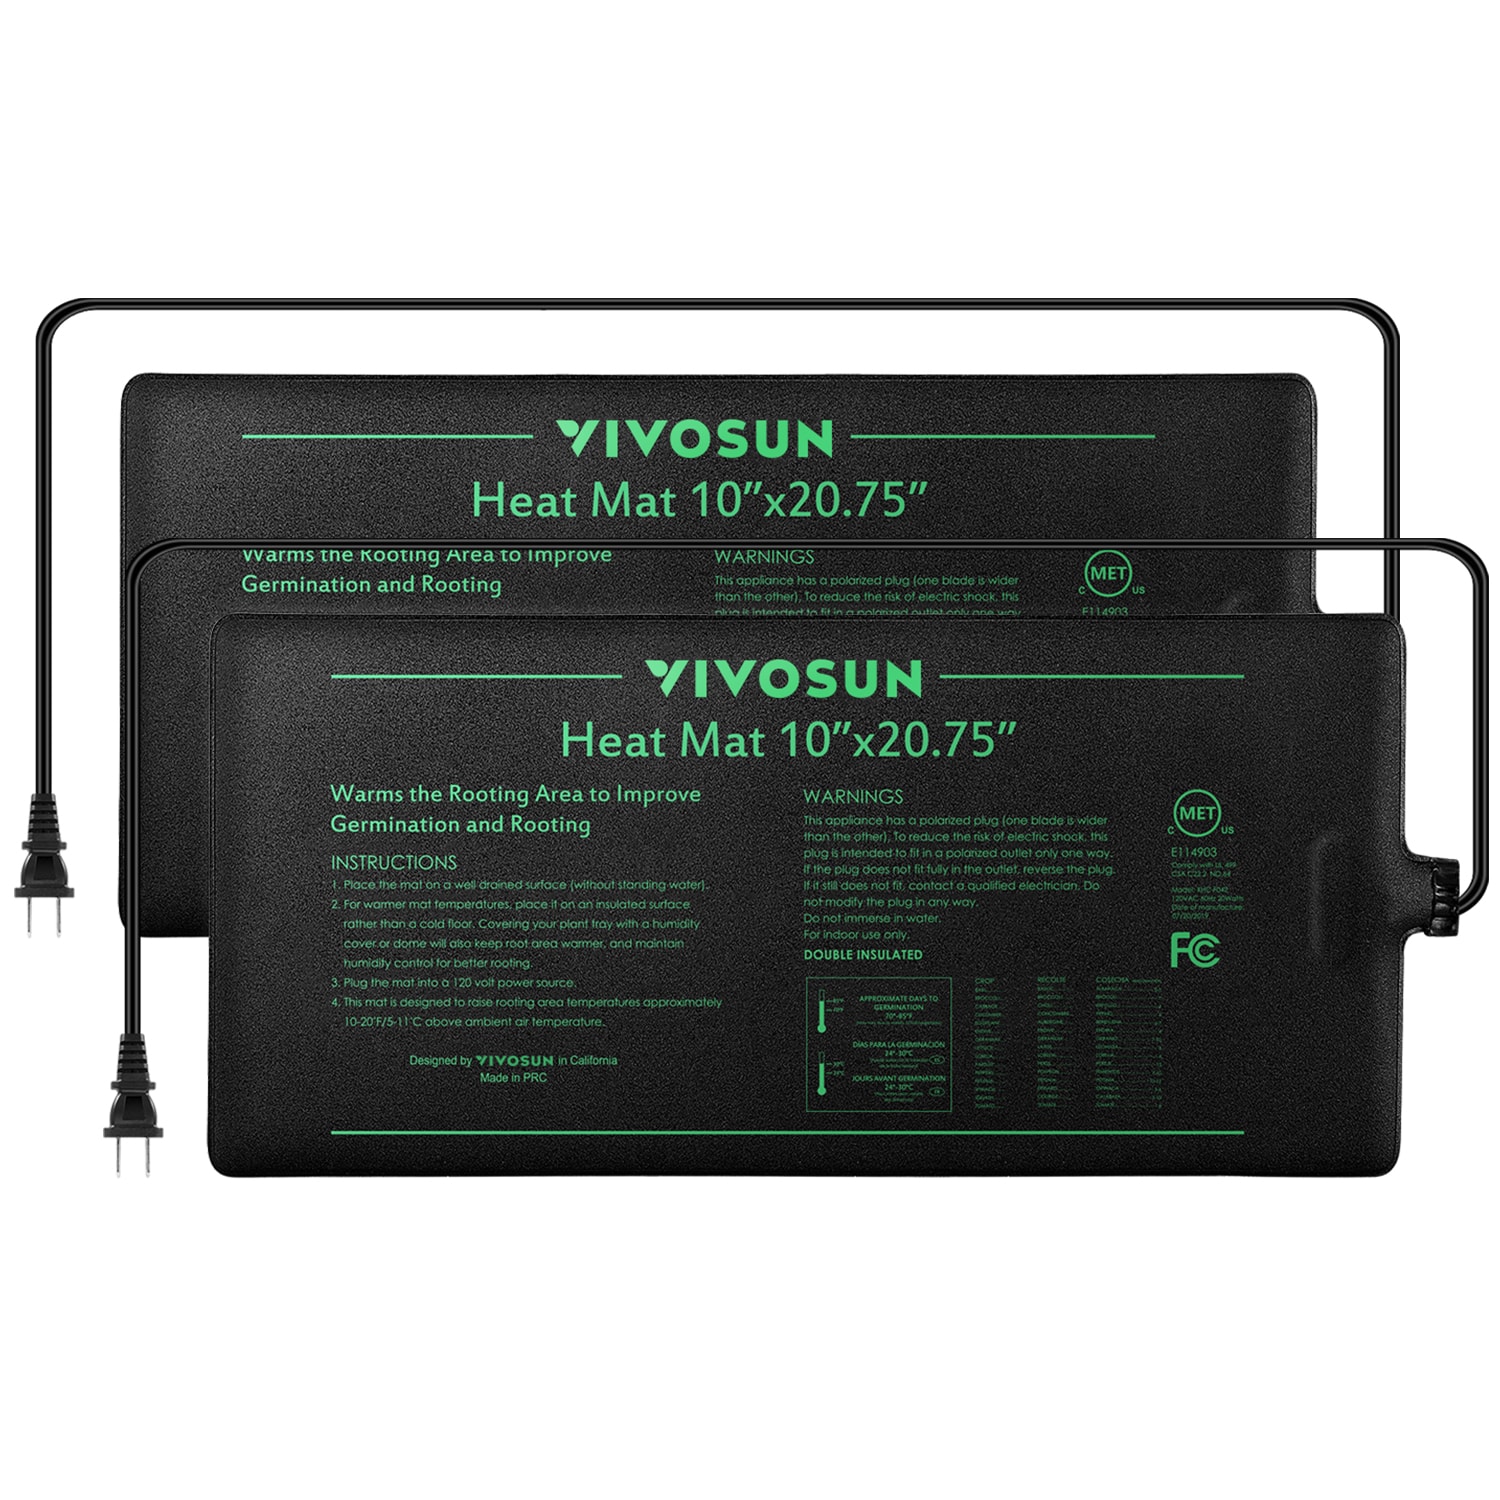 VIVOSUN Durable Waterproof Seedling Heat Mat 10 x 20.75 and VIVOSUN Digital Indoor Thermometer and Hygrometer Bundle 